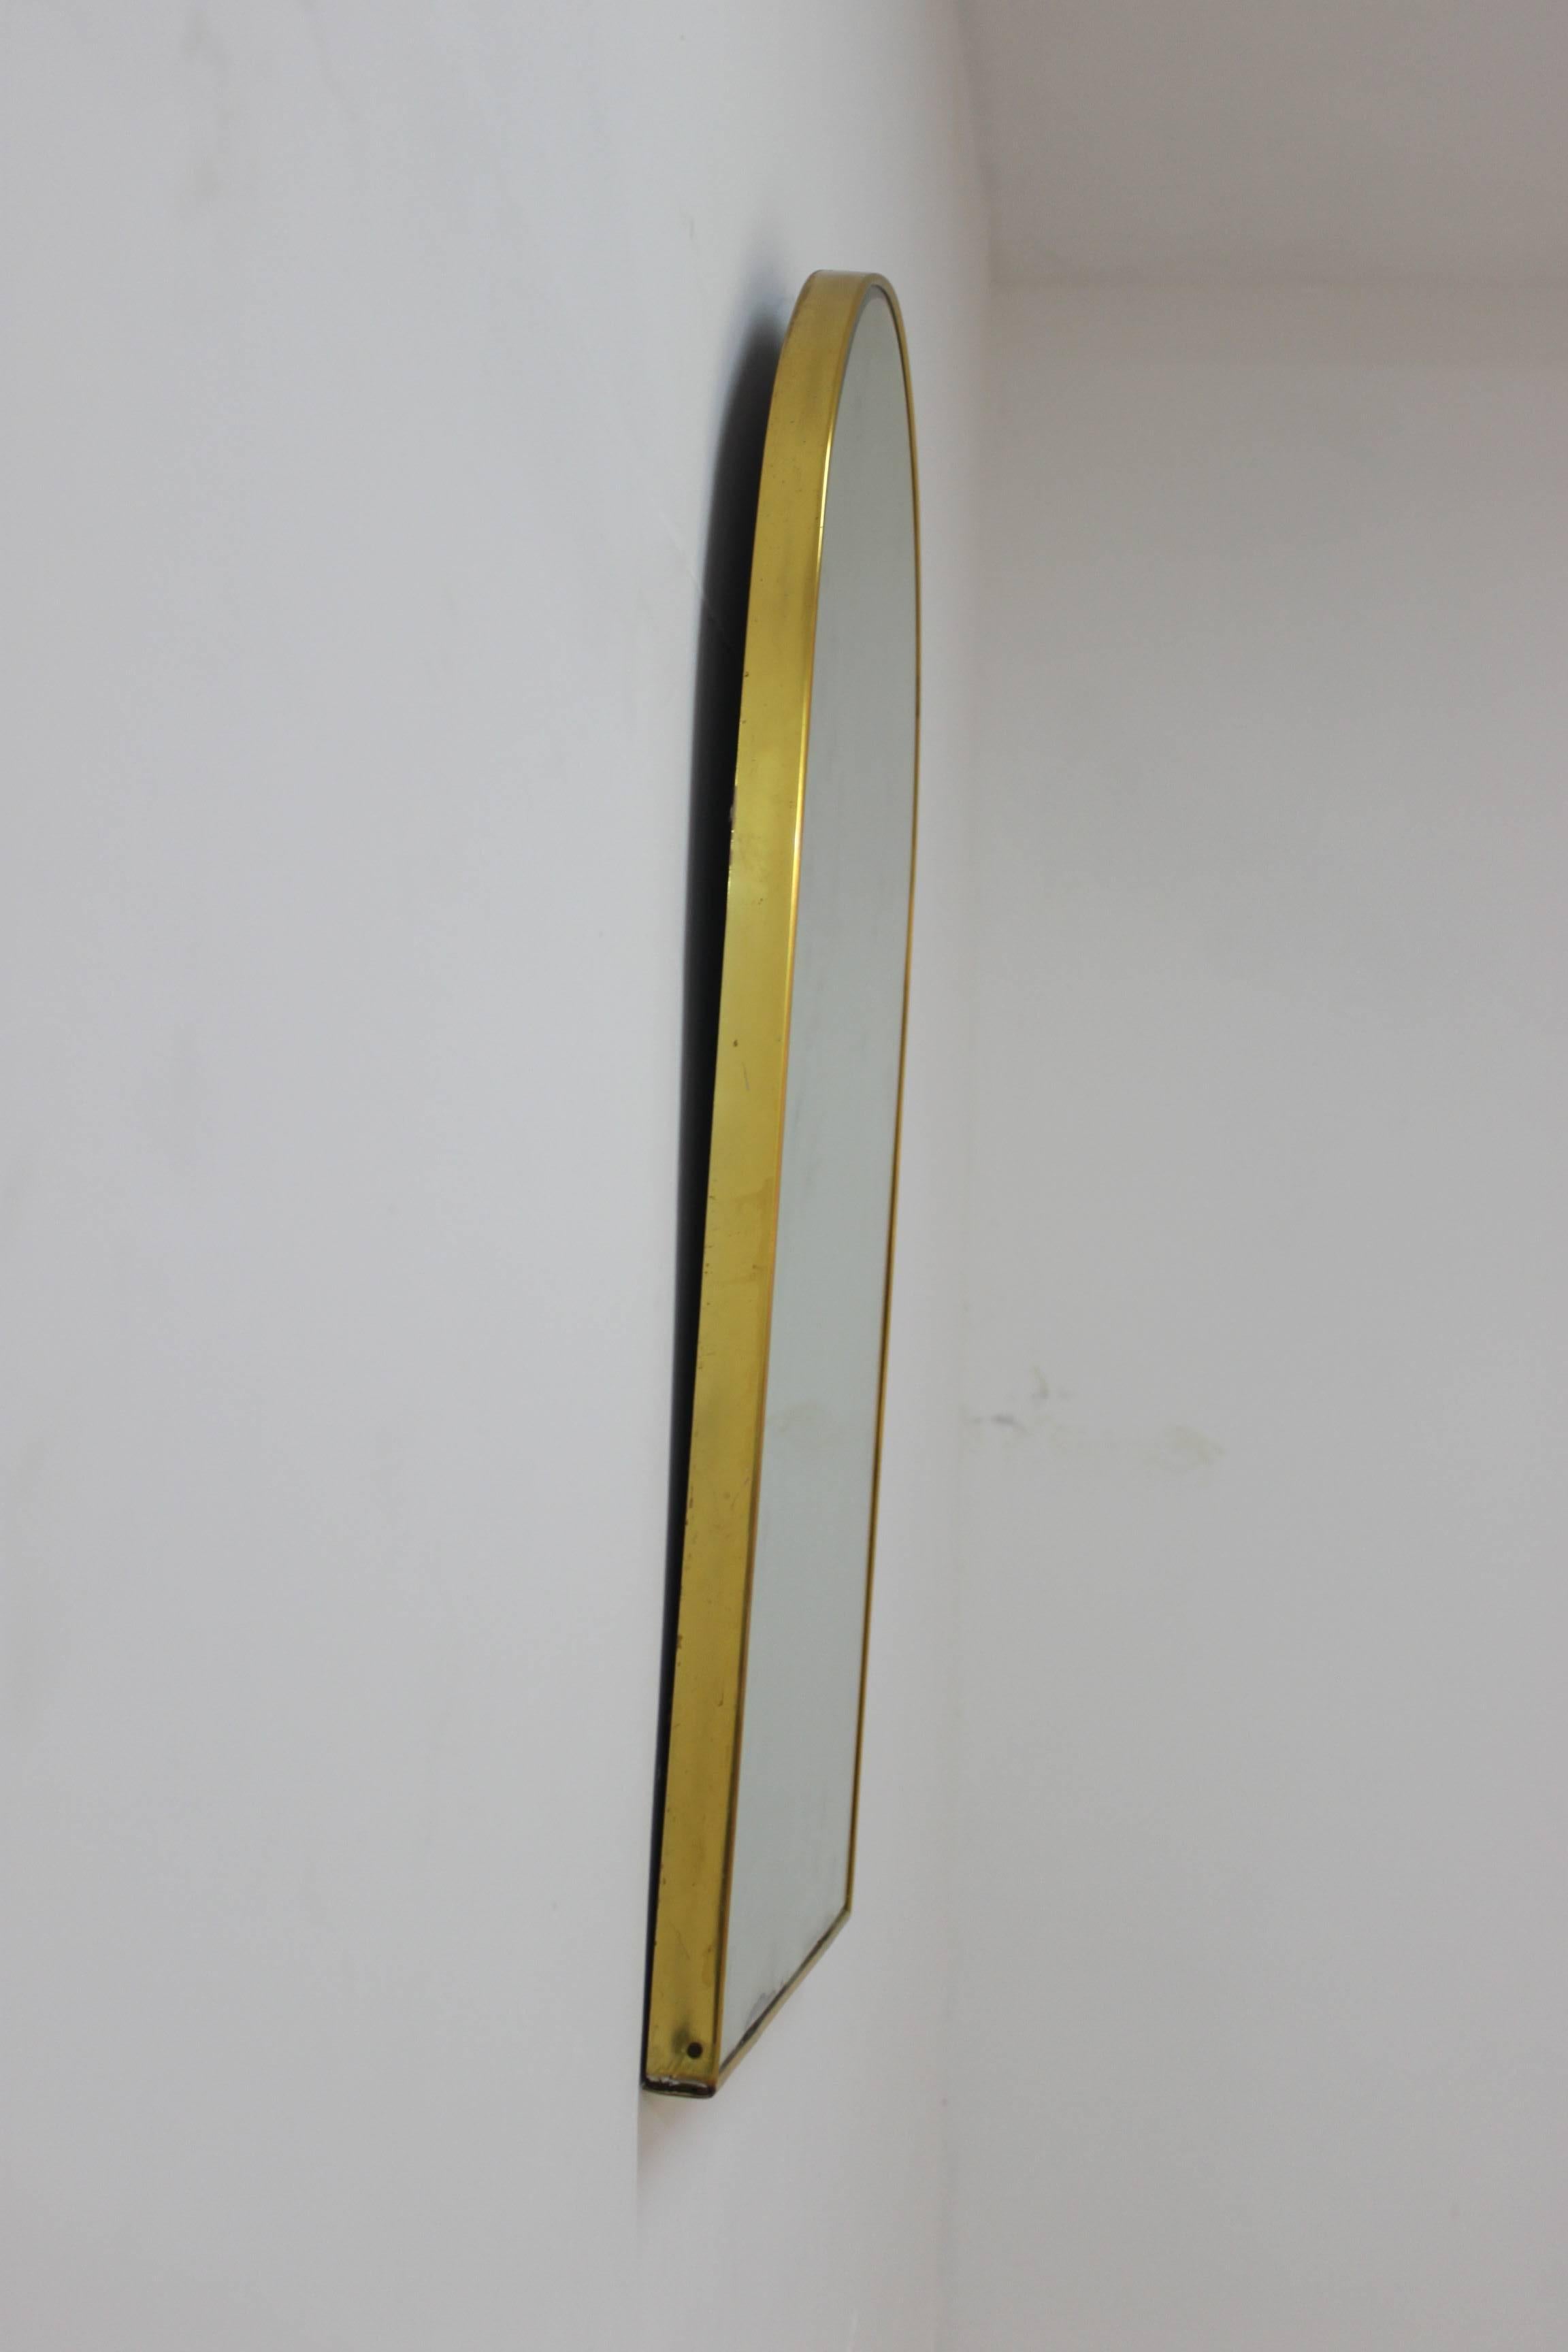 Italian mirror with brass details,
circa 1960.
 